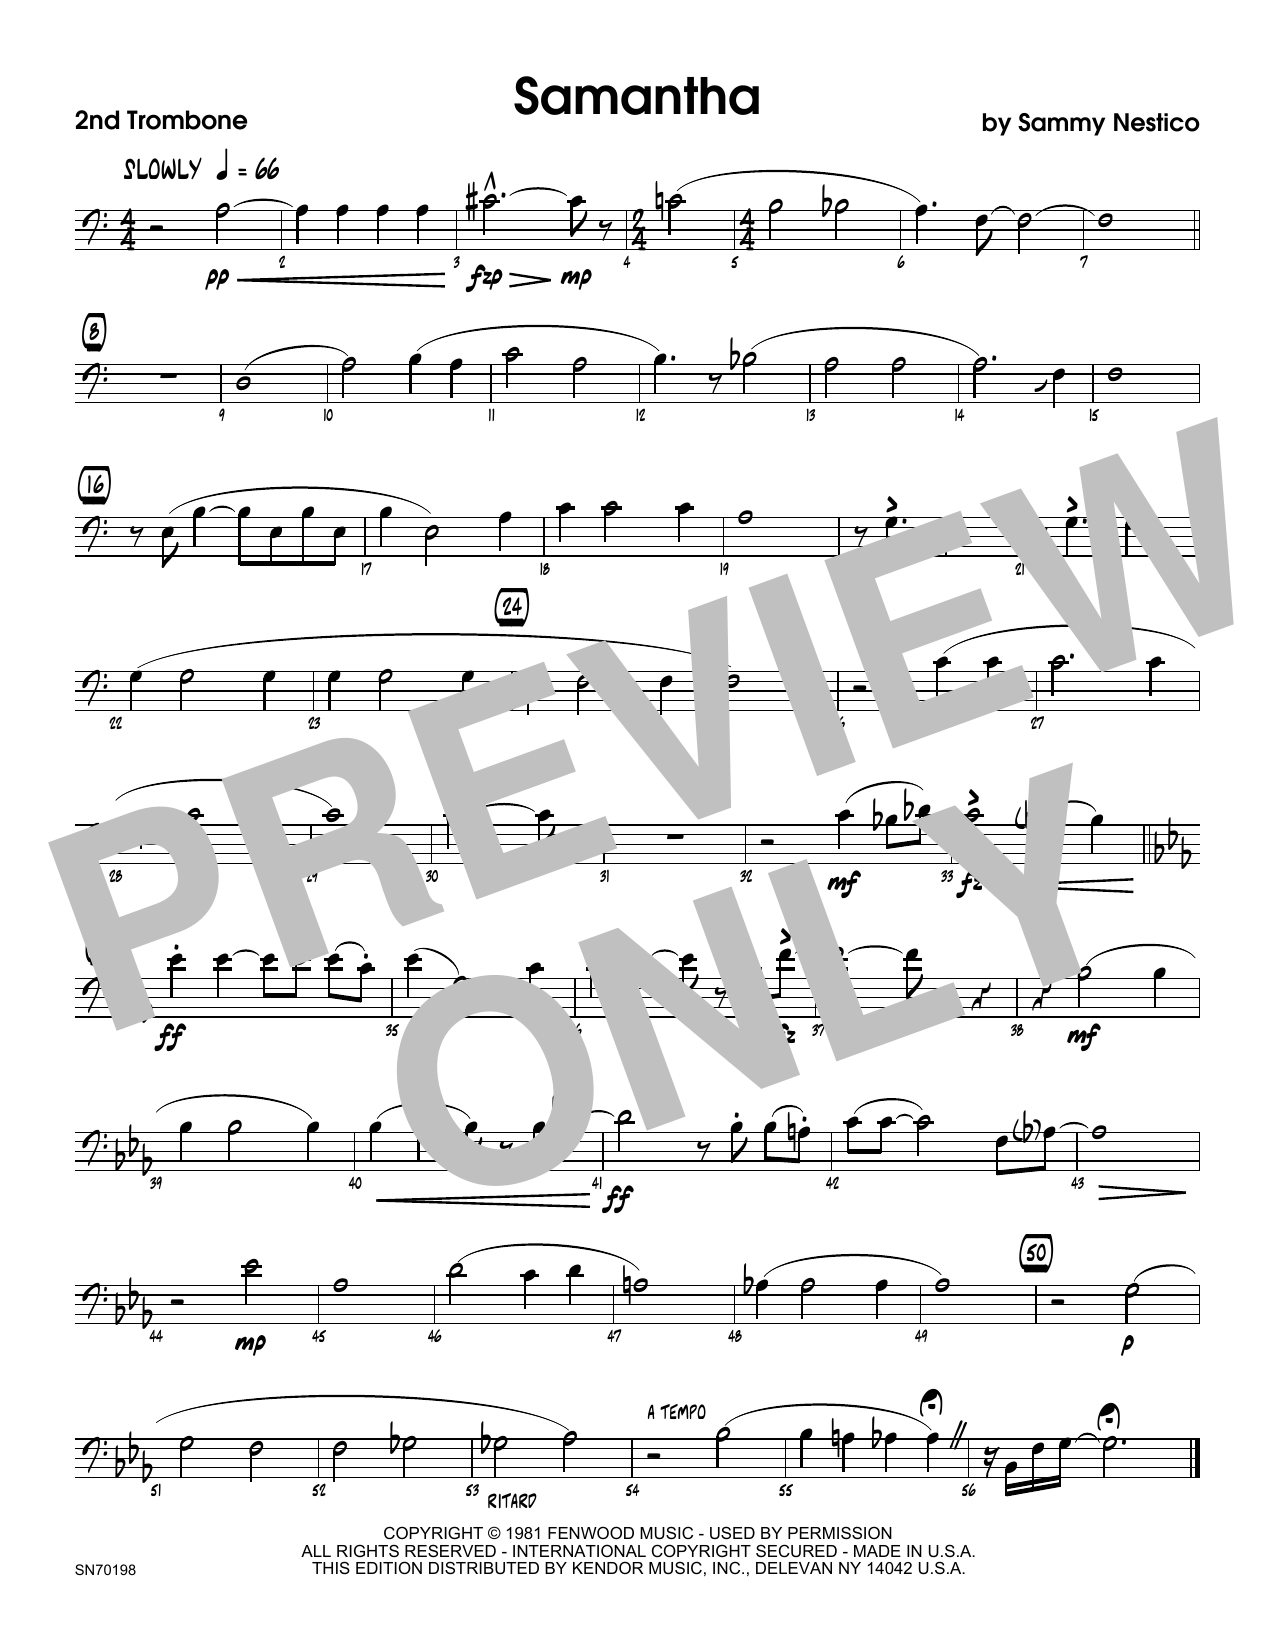 Download Sammy Nestico Samantha - 2nd Trombone Sheet Music